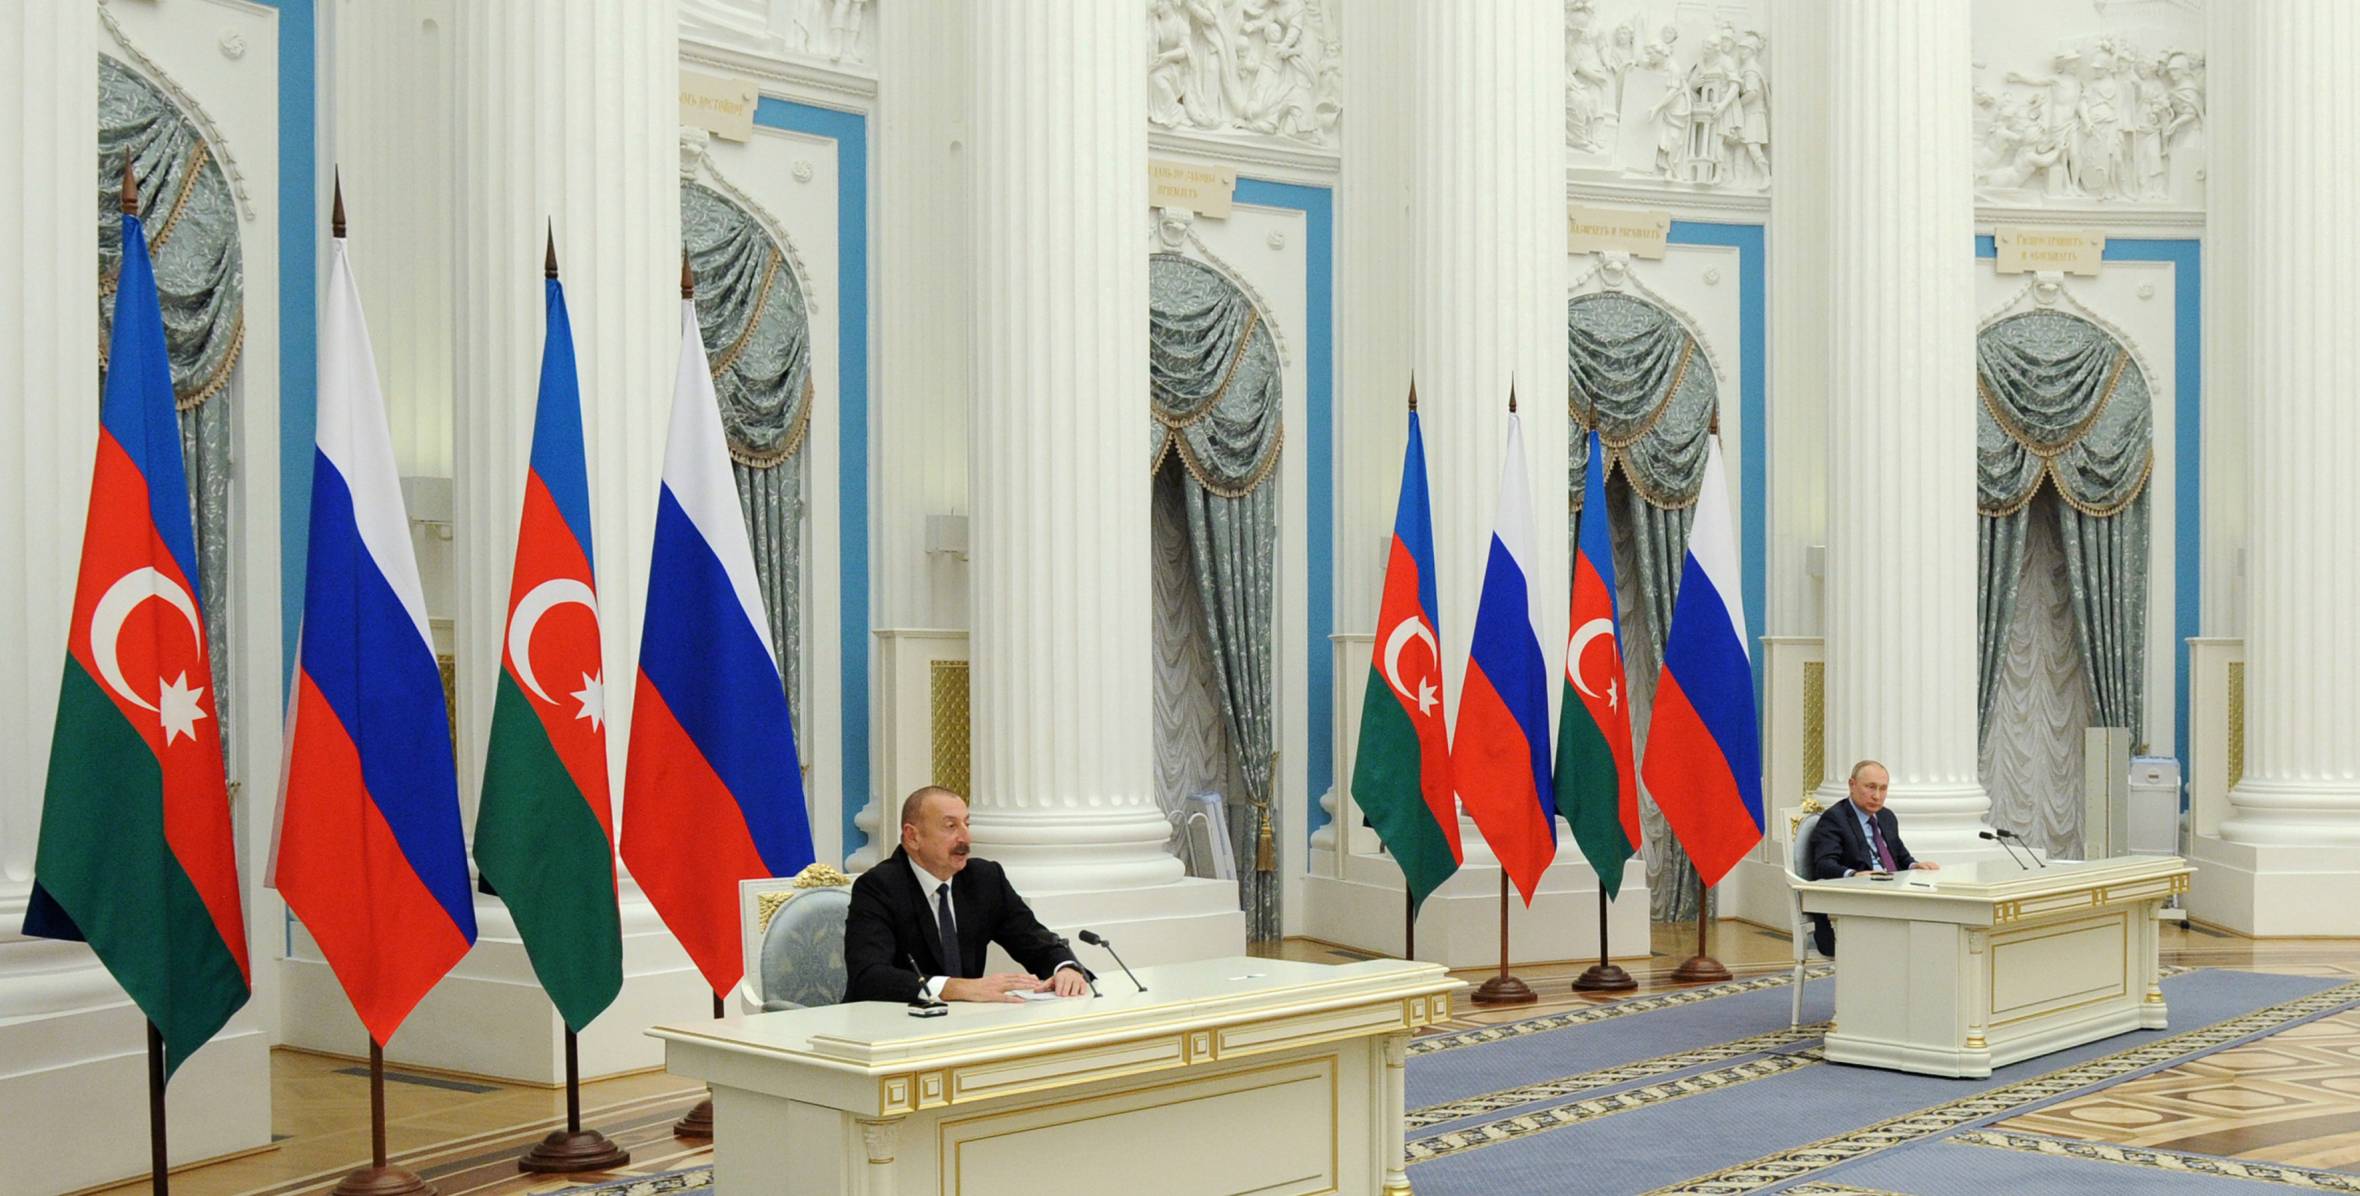 Ilham Aliyev and President Vladimir Putin have made press statements